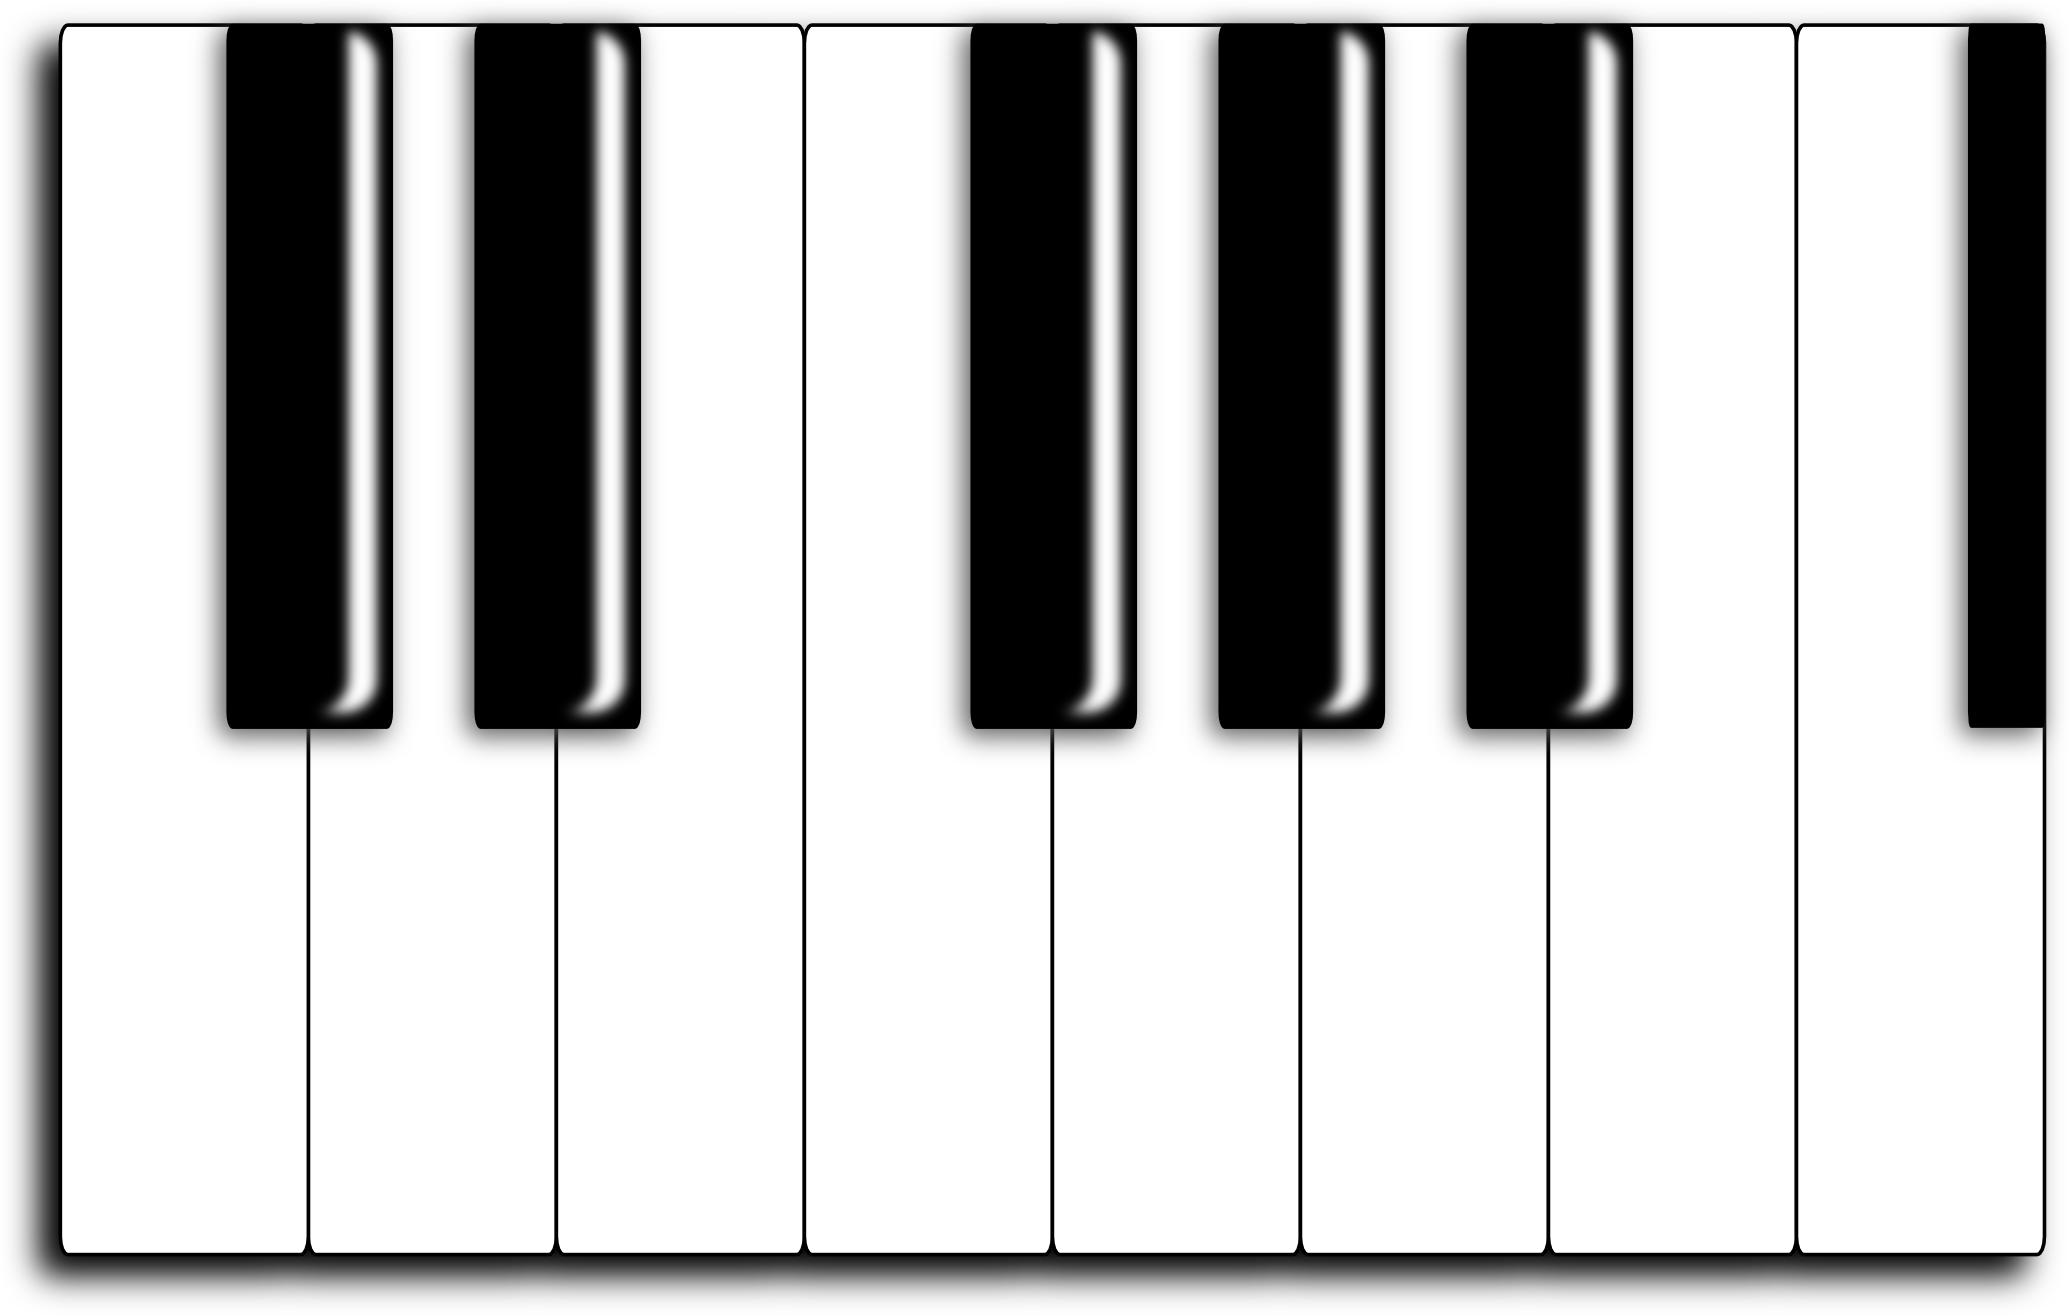 Keyboard piano clipart